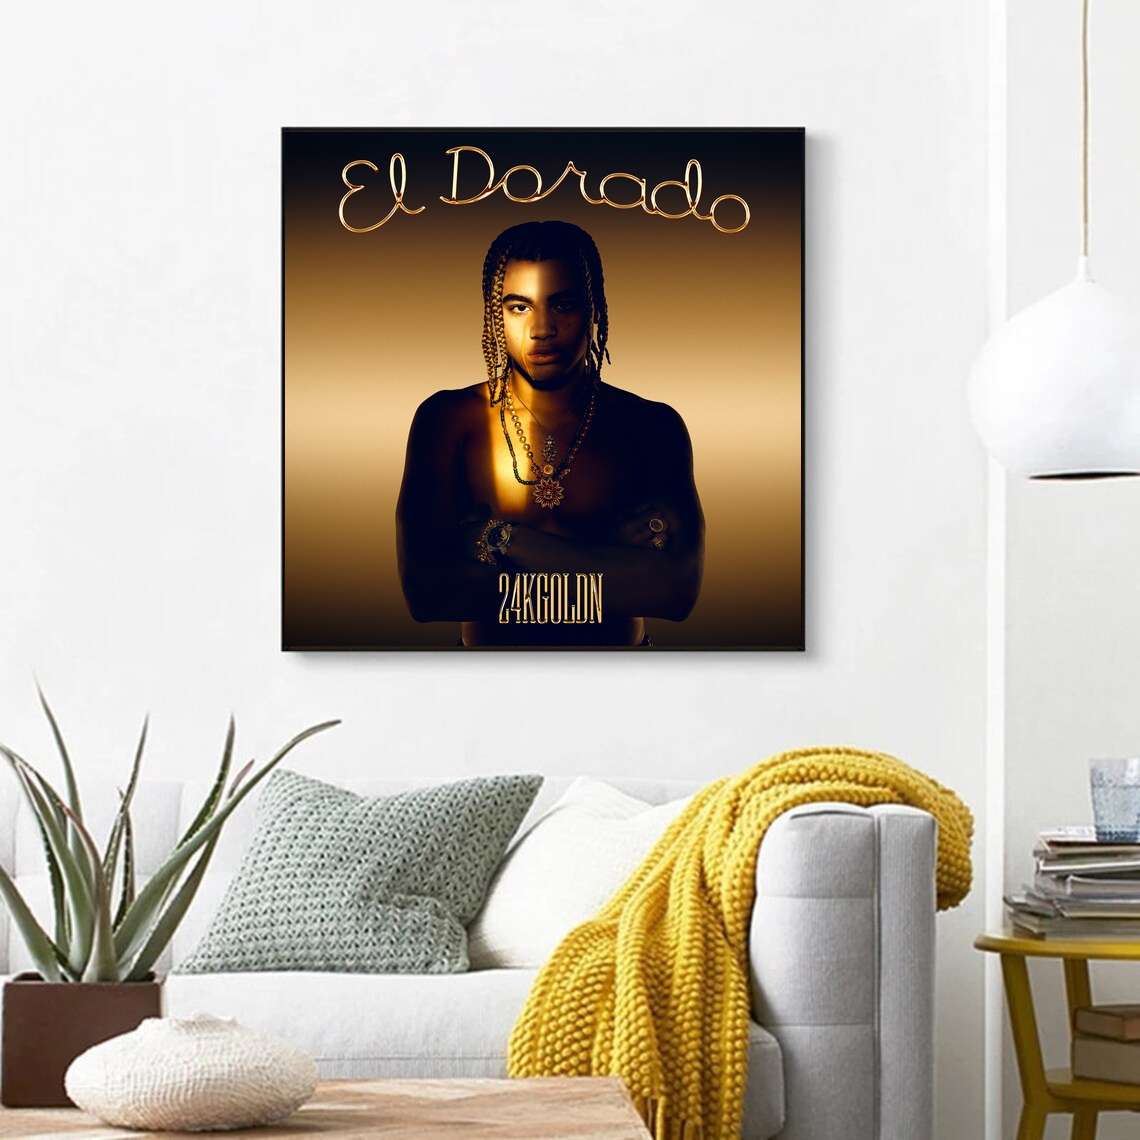 24KGOLDN El Dorado Music Album Cover Poster HD Printable Canvas Art Print Home Decor Wall Painting No Frame